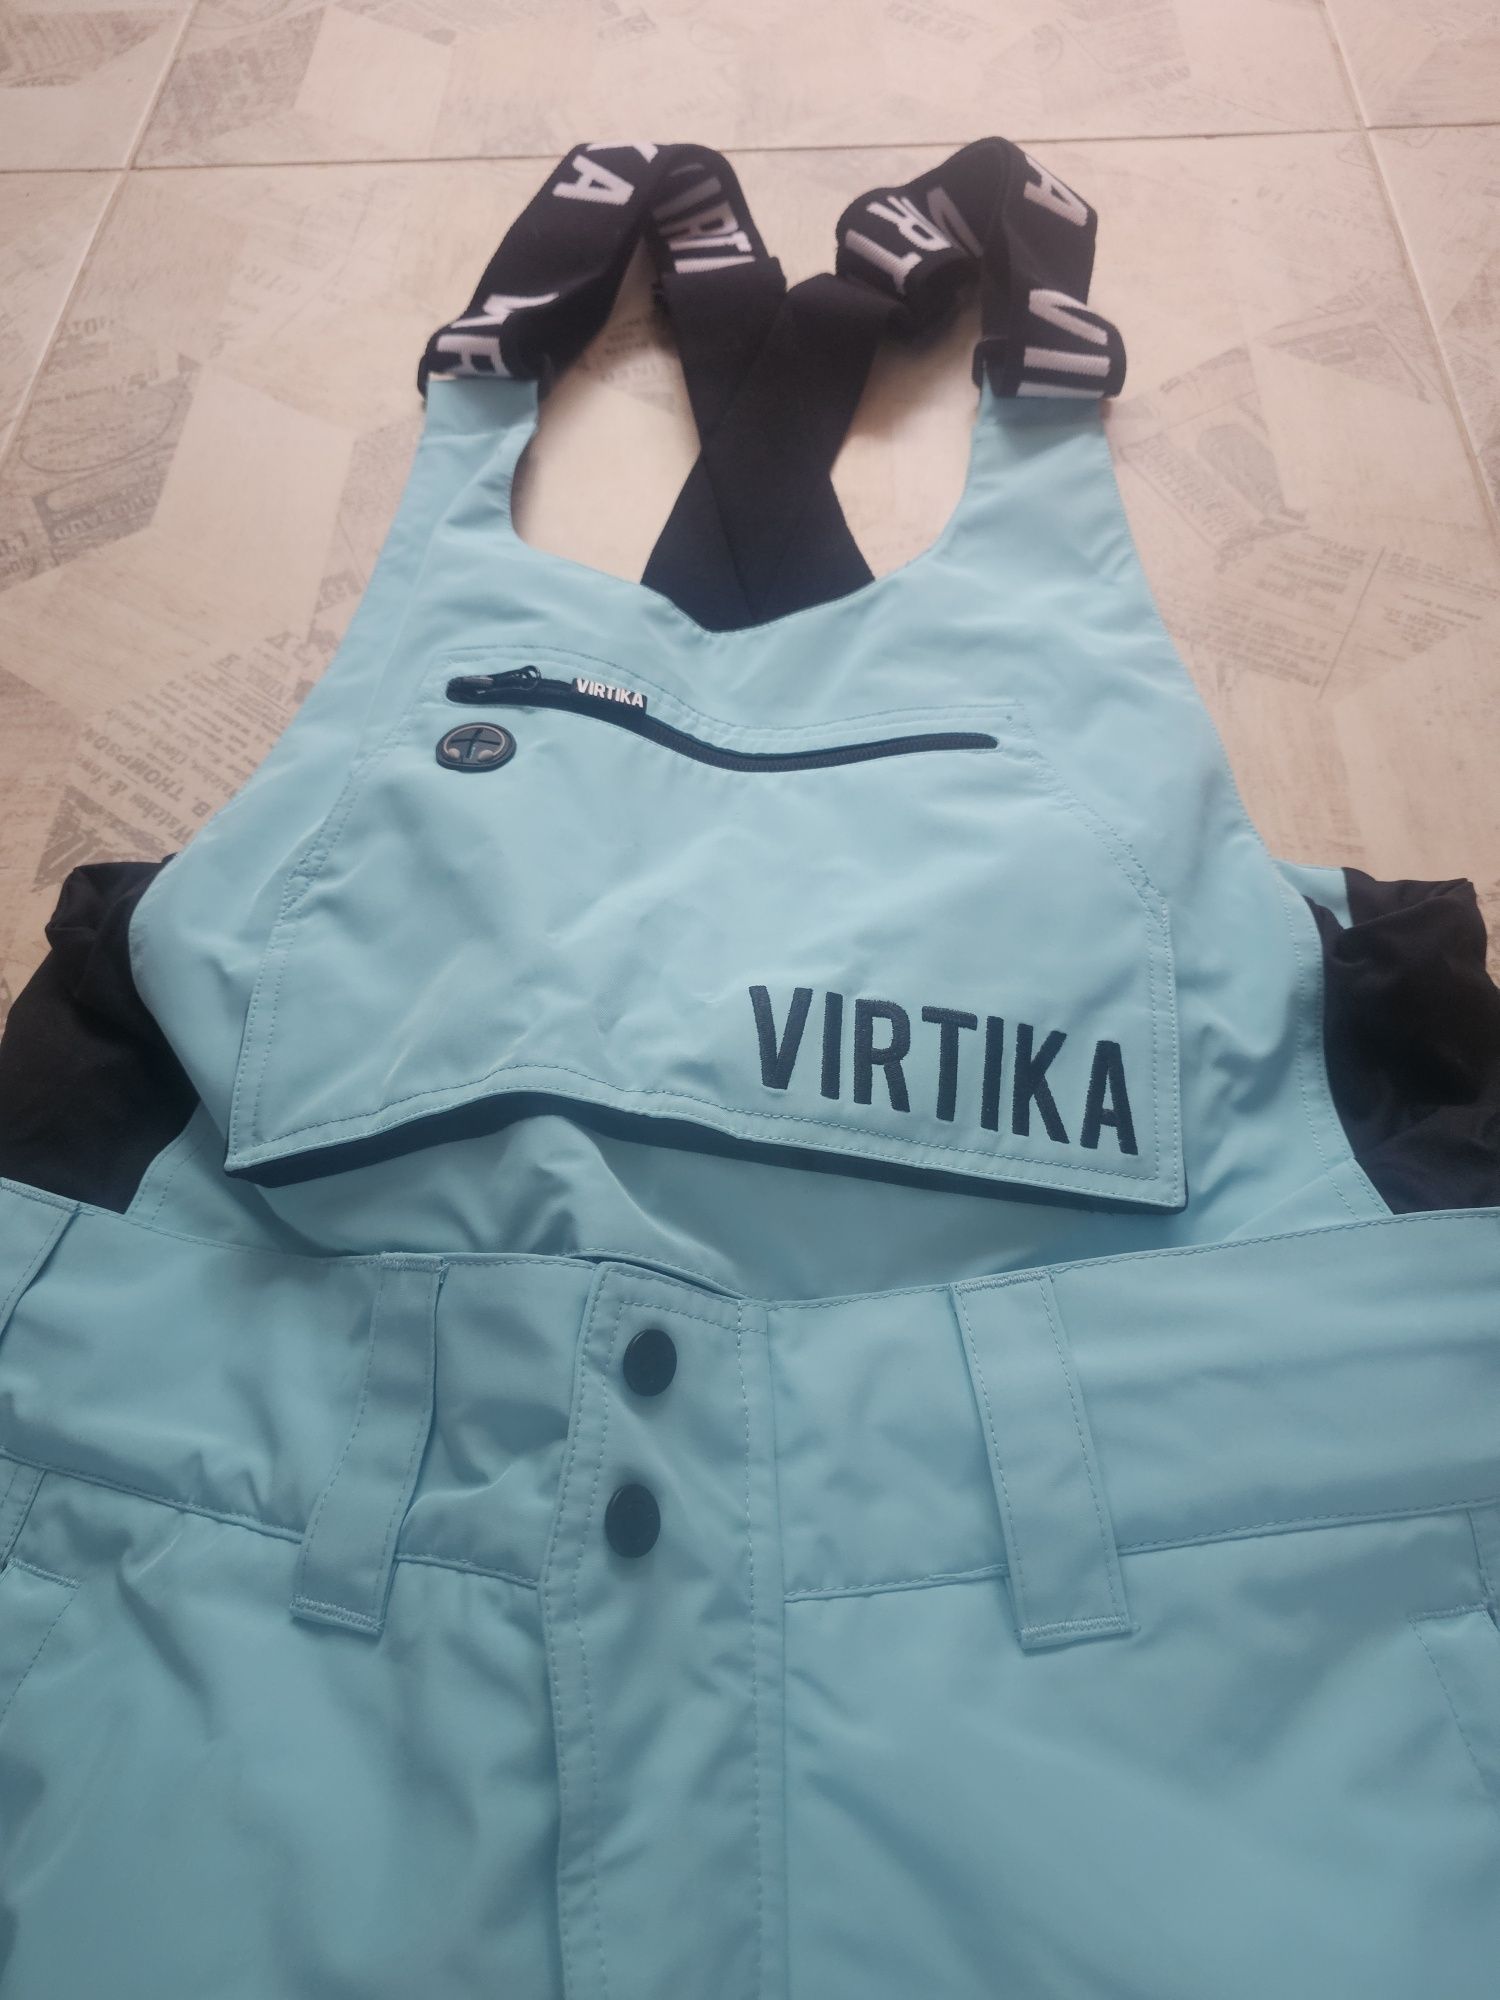 Virtika панталон за ски. Панталон за сноуборд. Панталон за зимни спорт